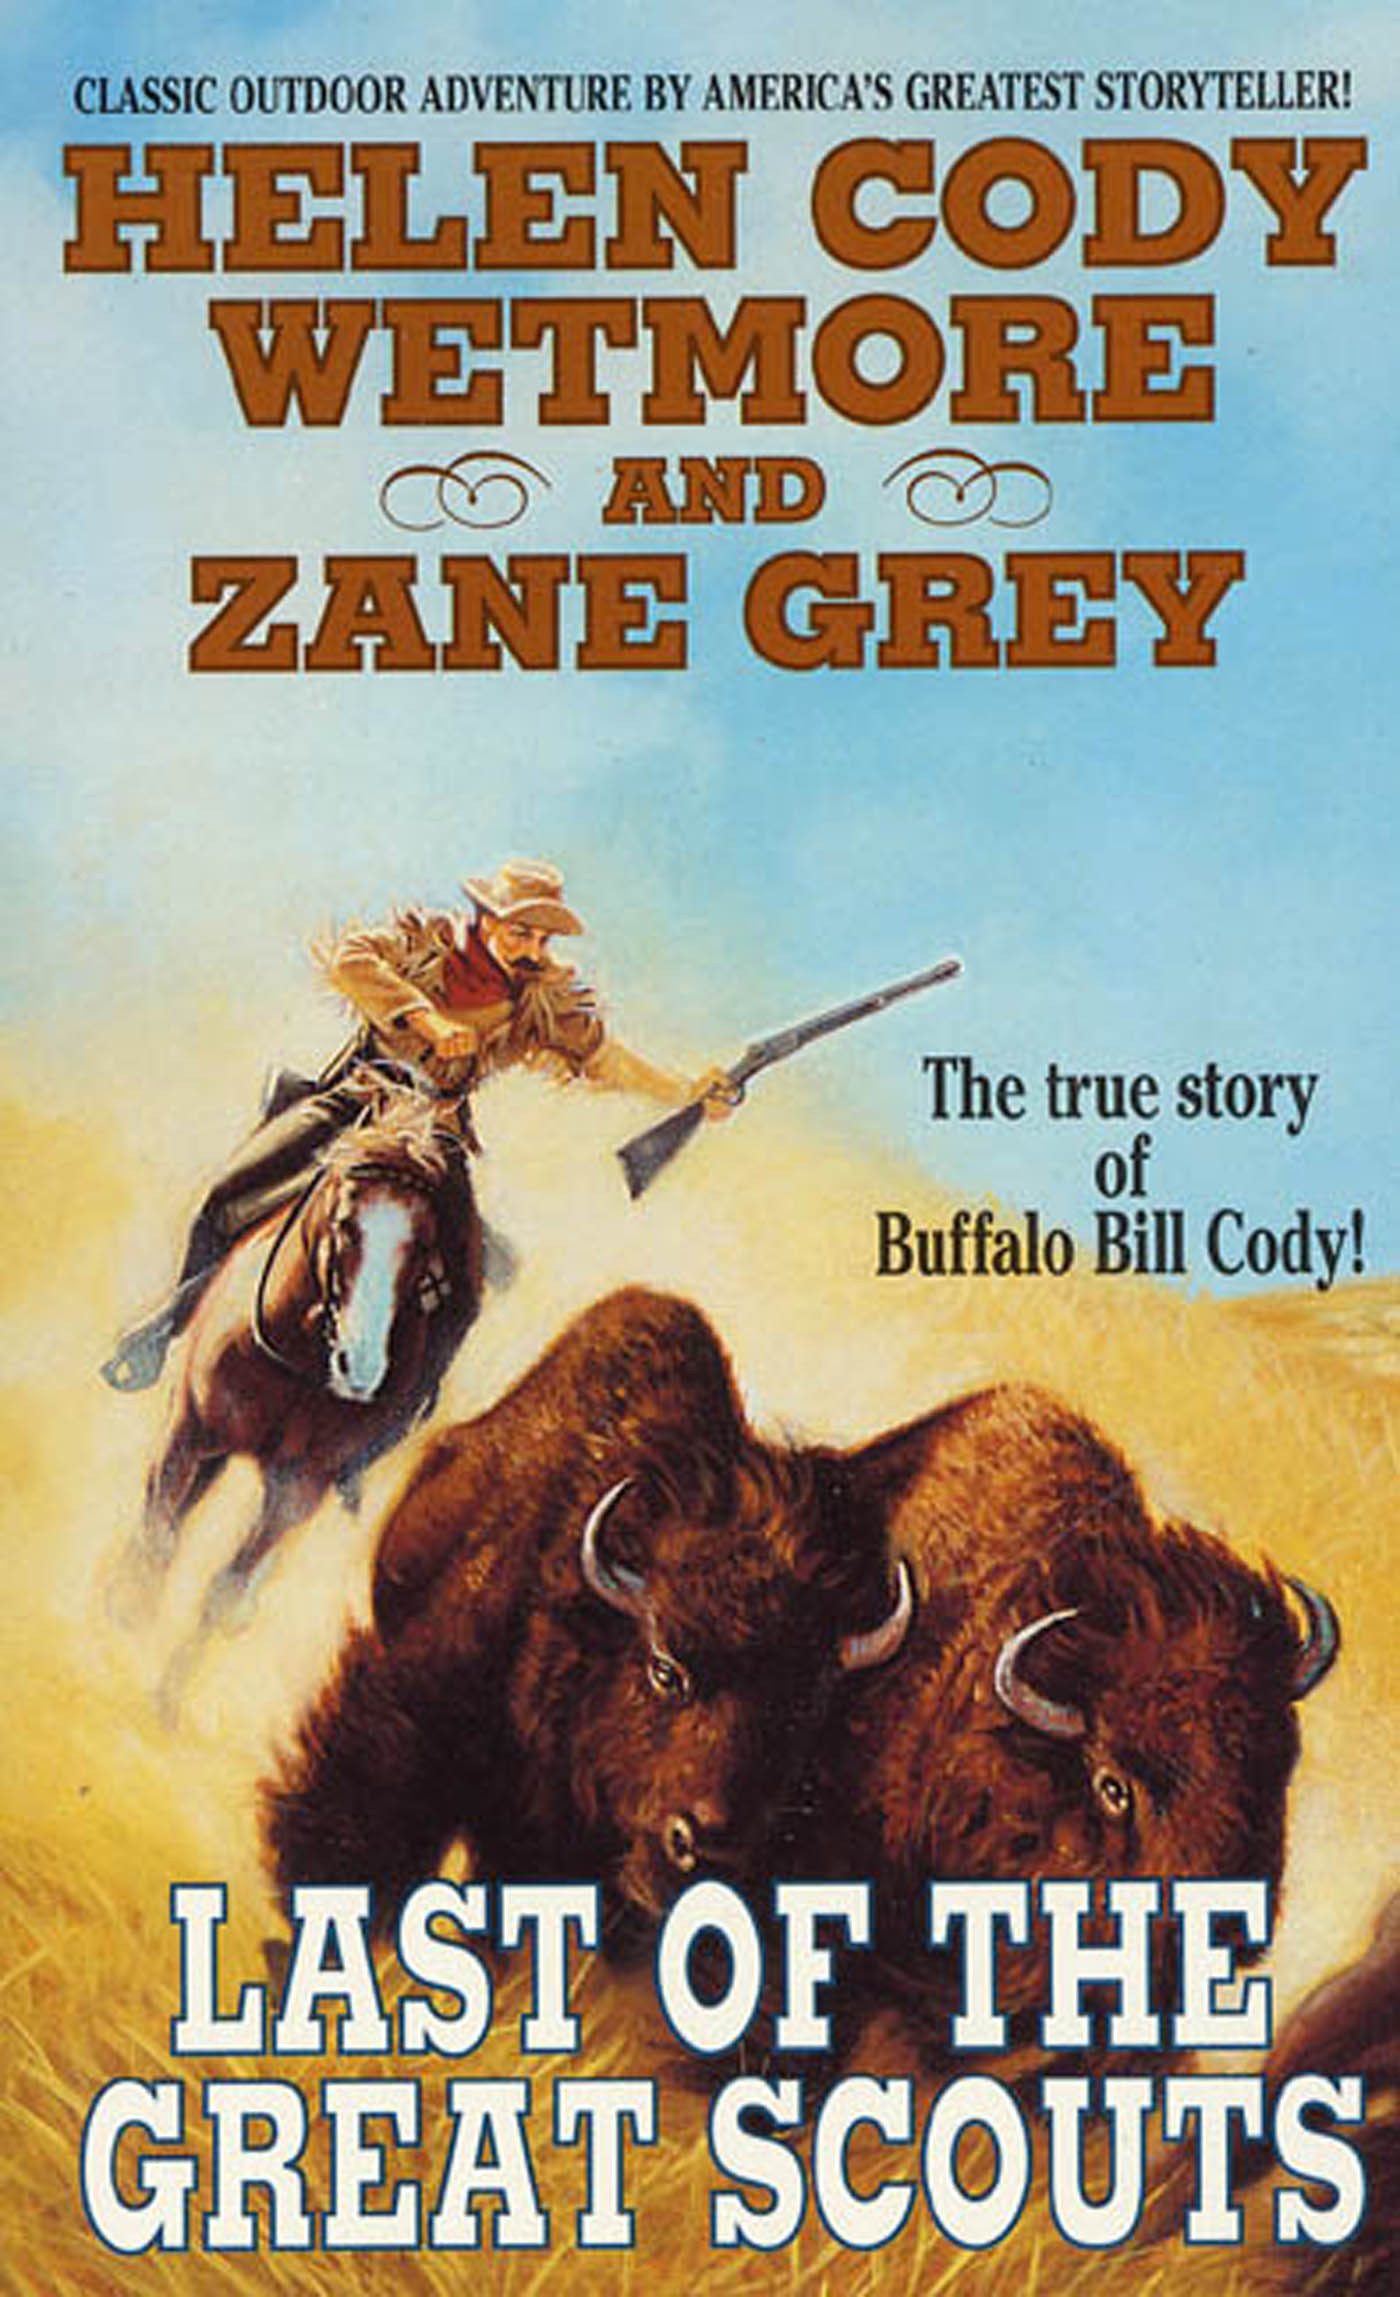 Last of the Great Scouts : The True Story of Buffalo Bill Cody by Helen Cody Wetmore, Zane Grey